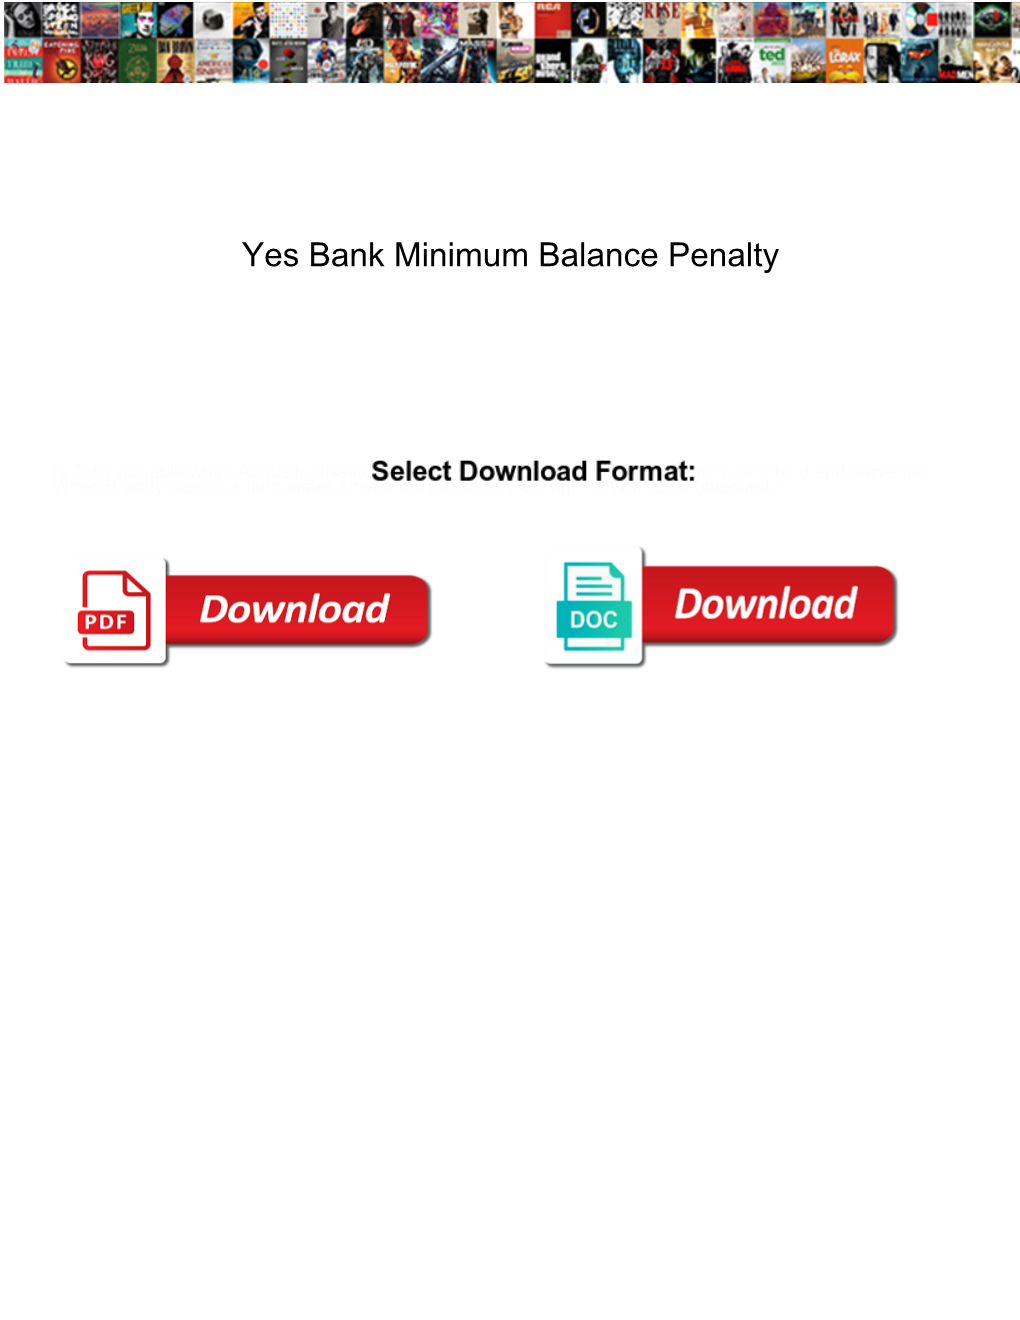 Yes Bank Minimum Balance Penalty